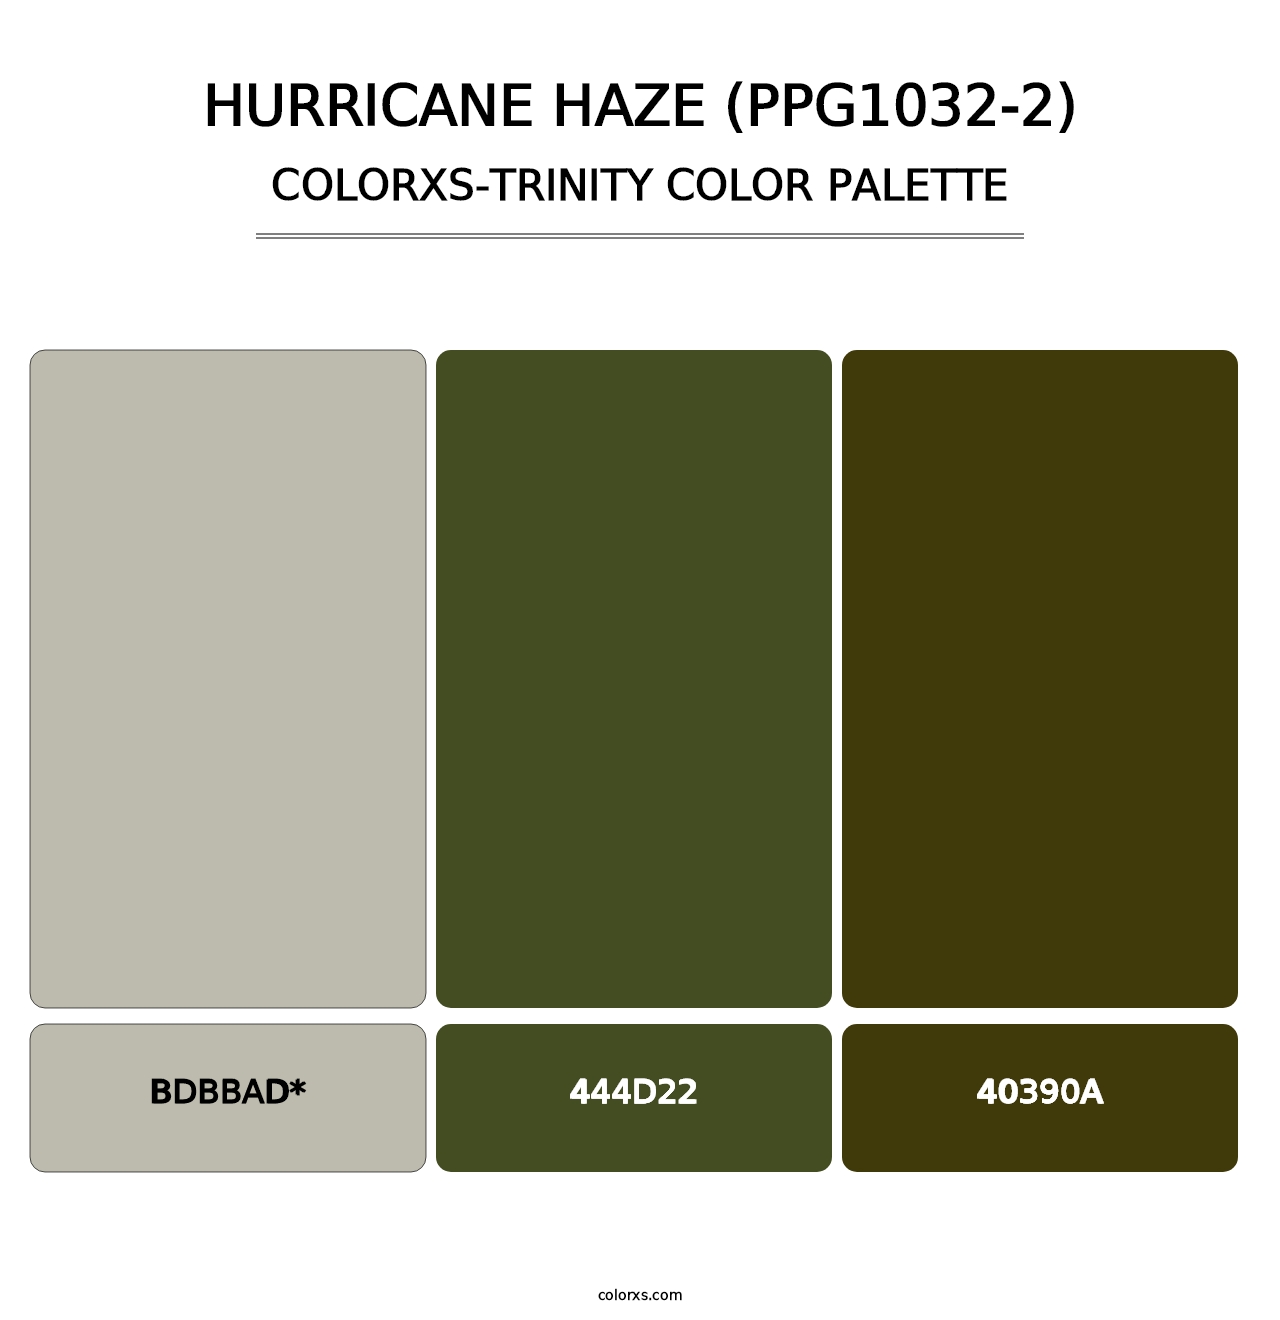 Hurricane Haze (PPG1032-2) - Colorxs Trinity Palette